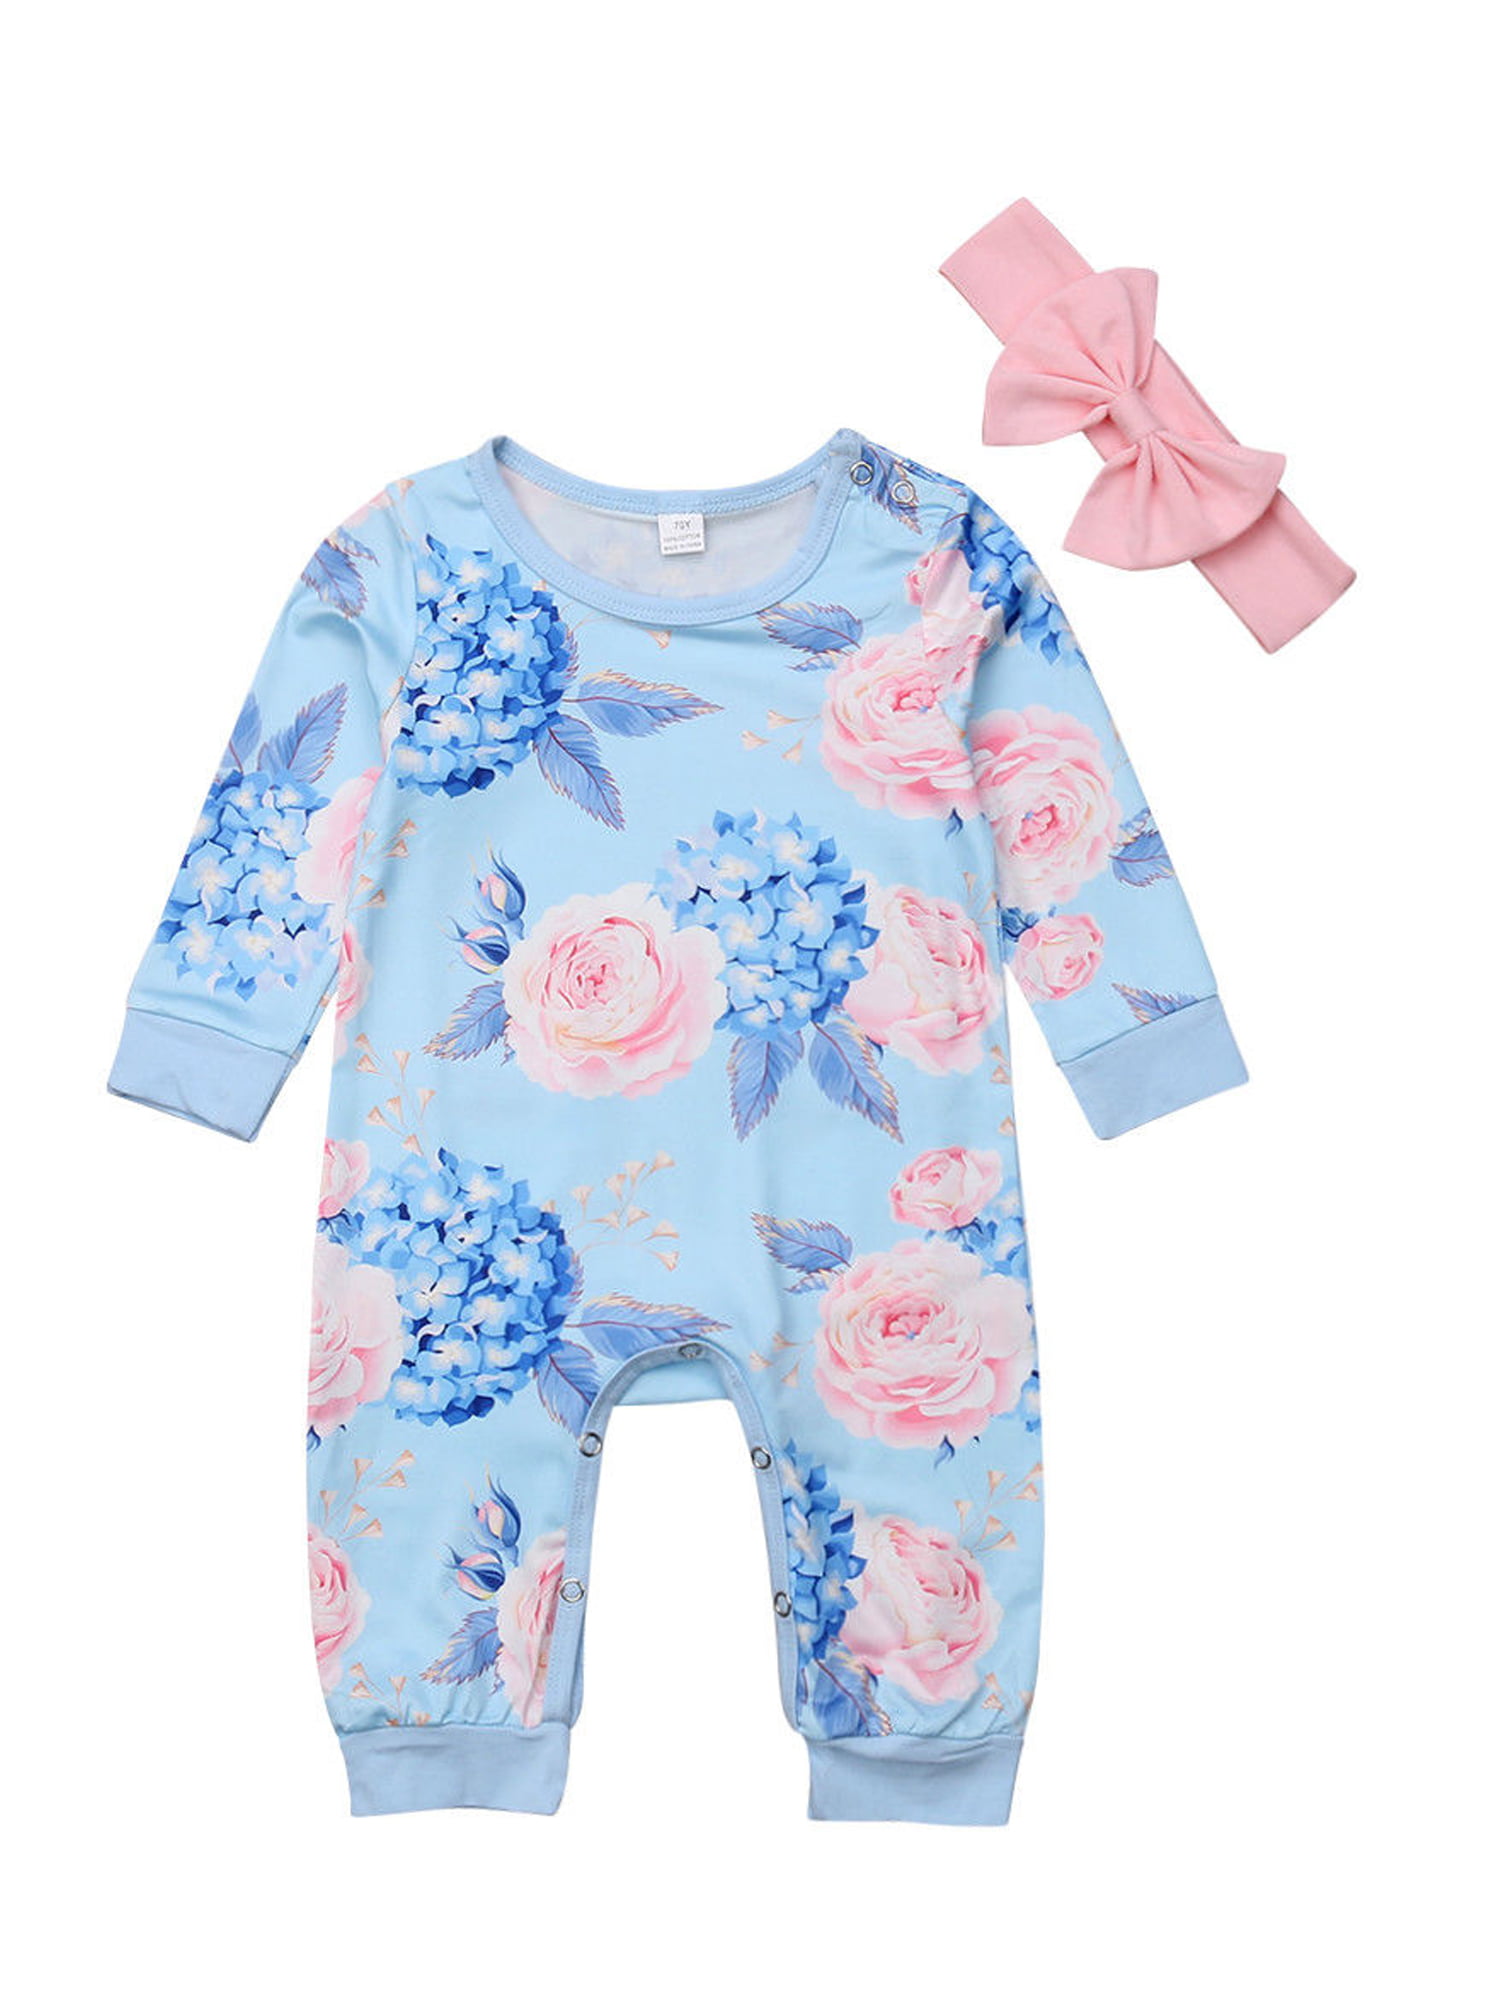 Newborn Baby Girls Outfits Clothes Floral Romper Bodysuit Jumpsuit Playsuit 